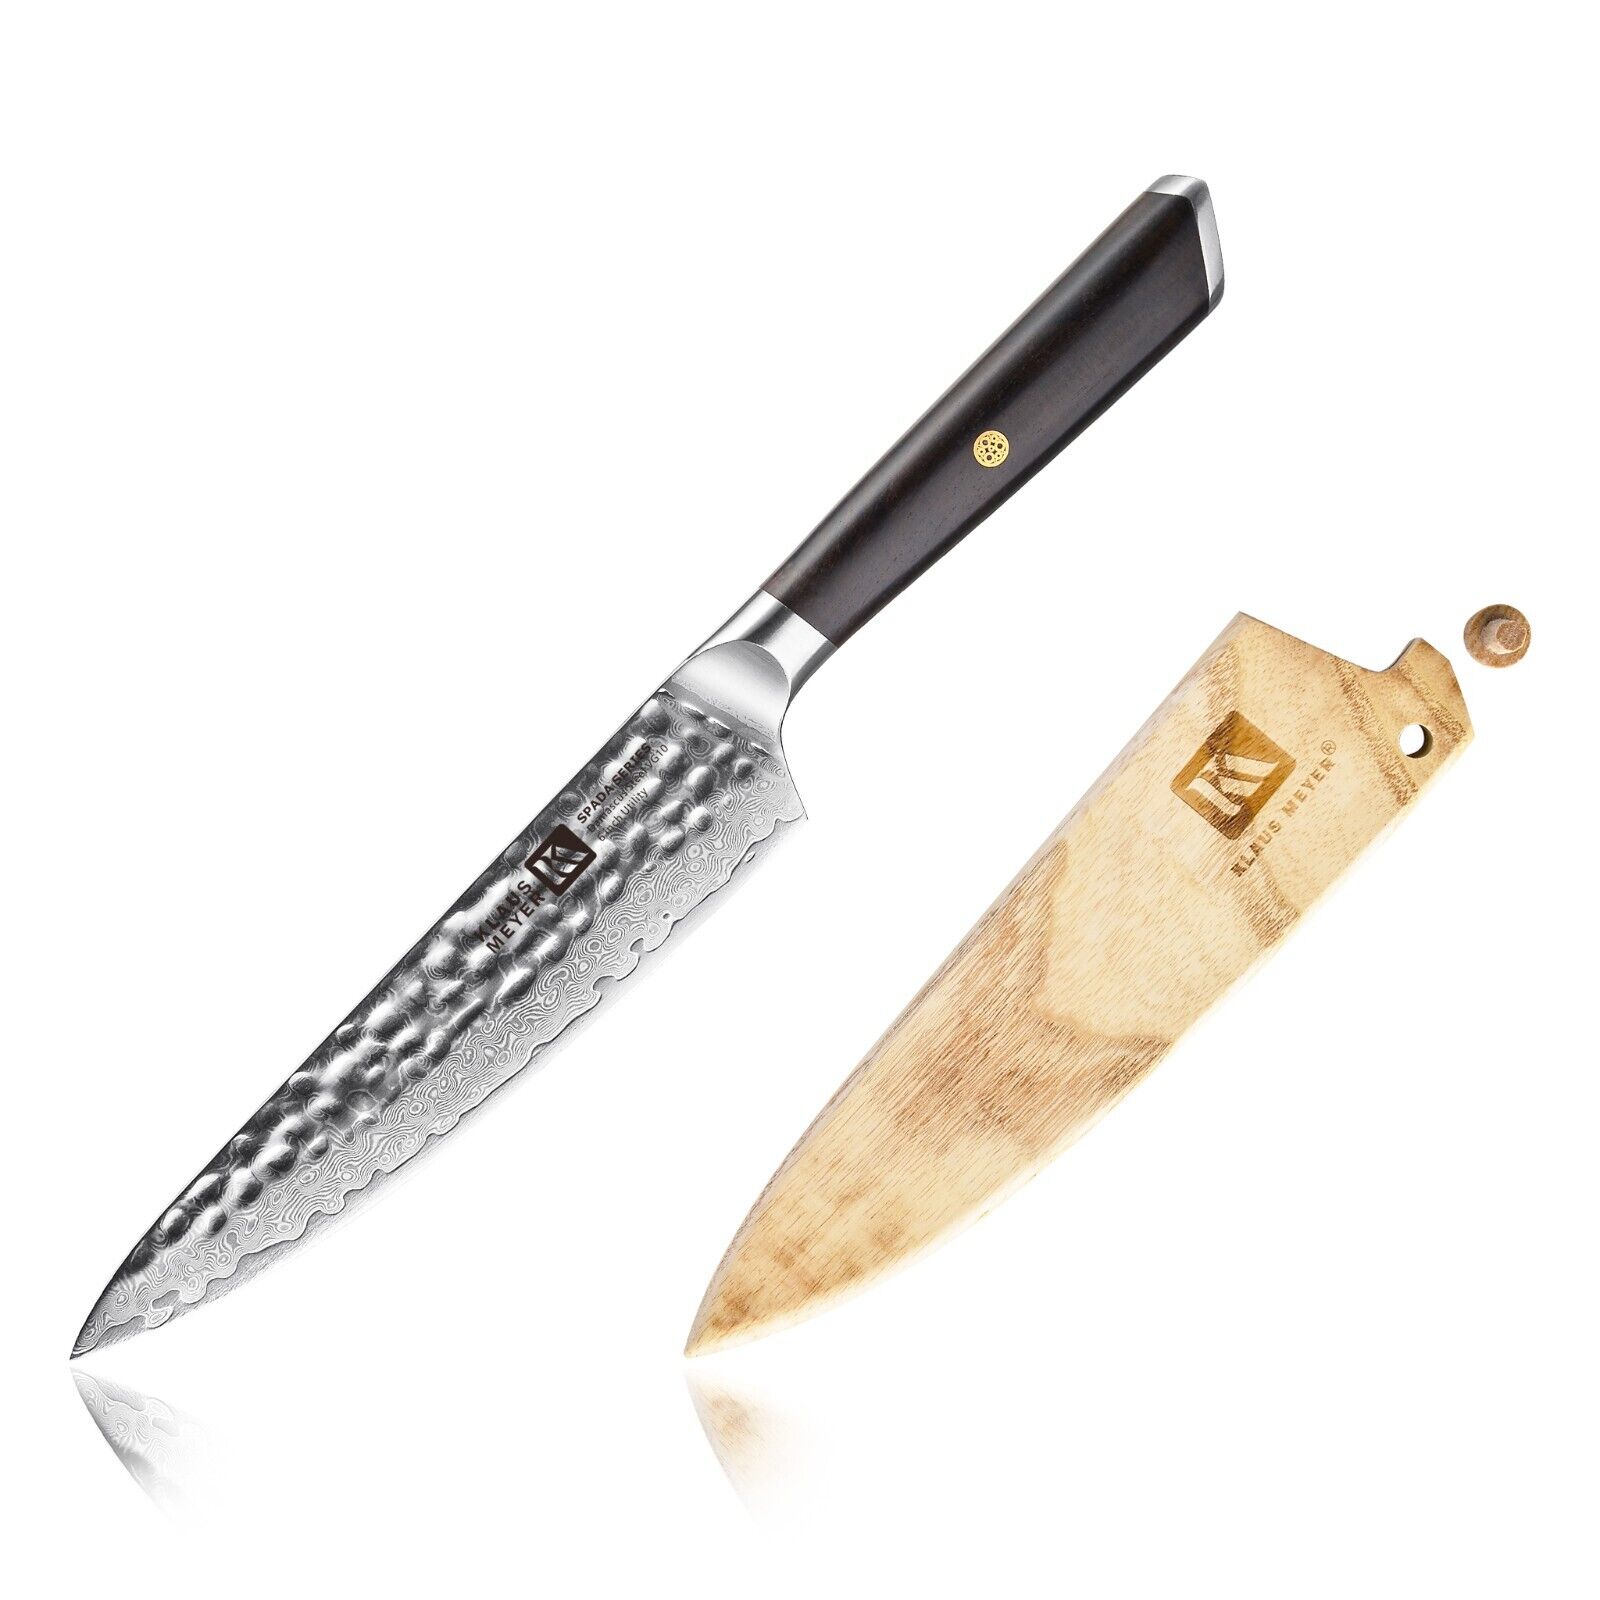 Klaus Meyer Spada Damascus Steel 6 inch Utility Knife with Wood Sheath